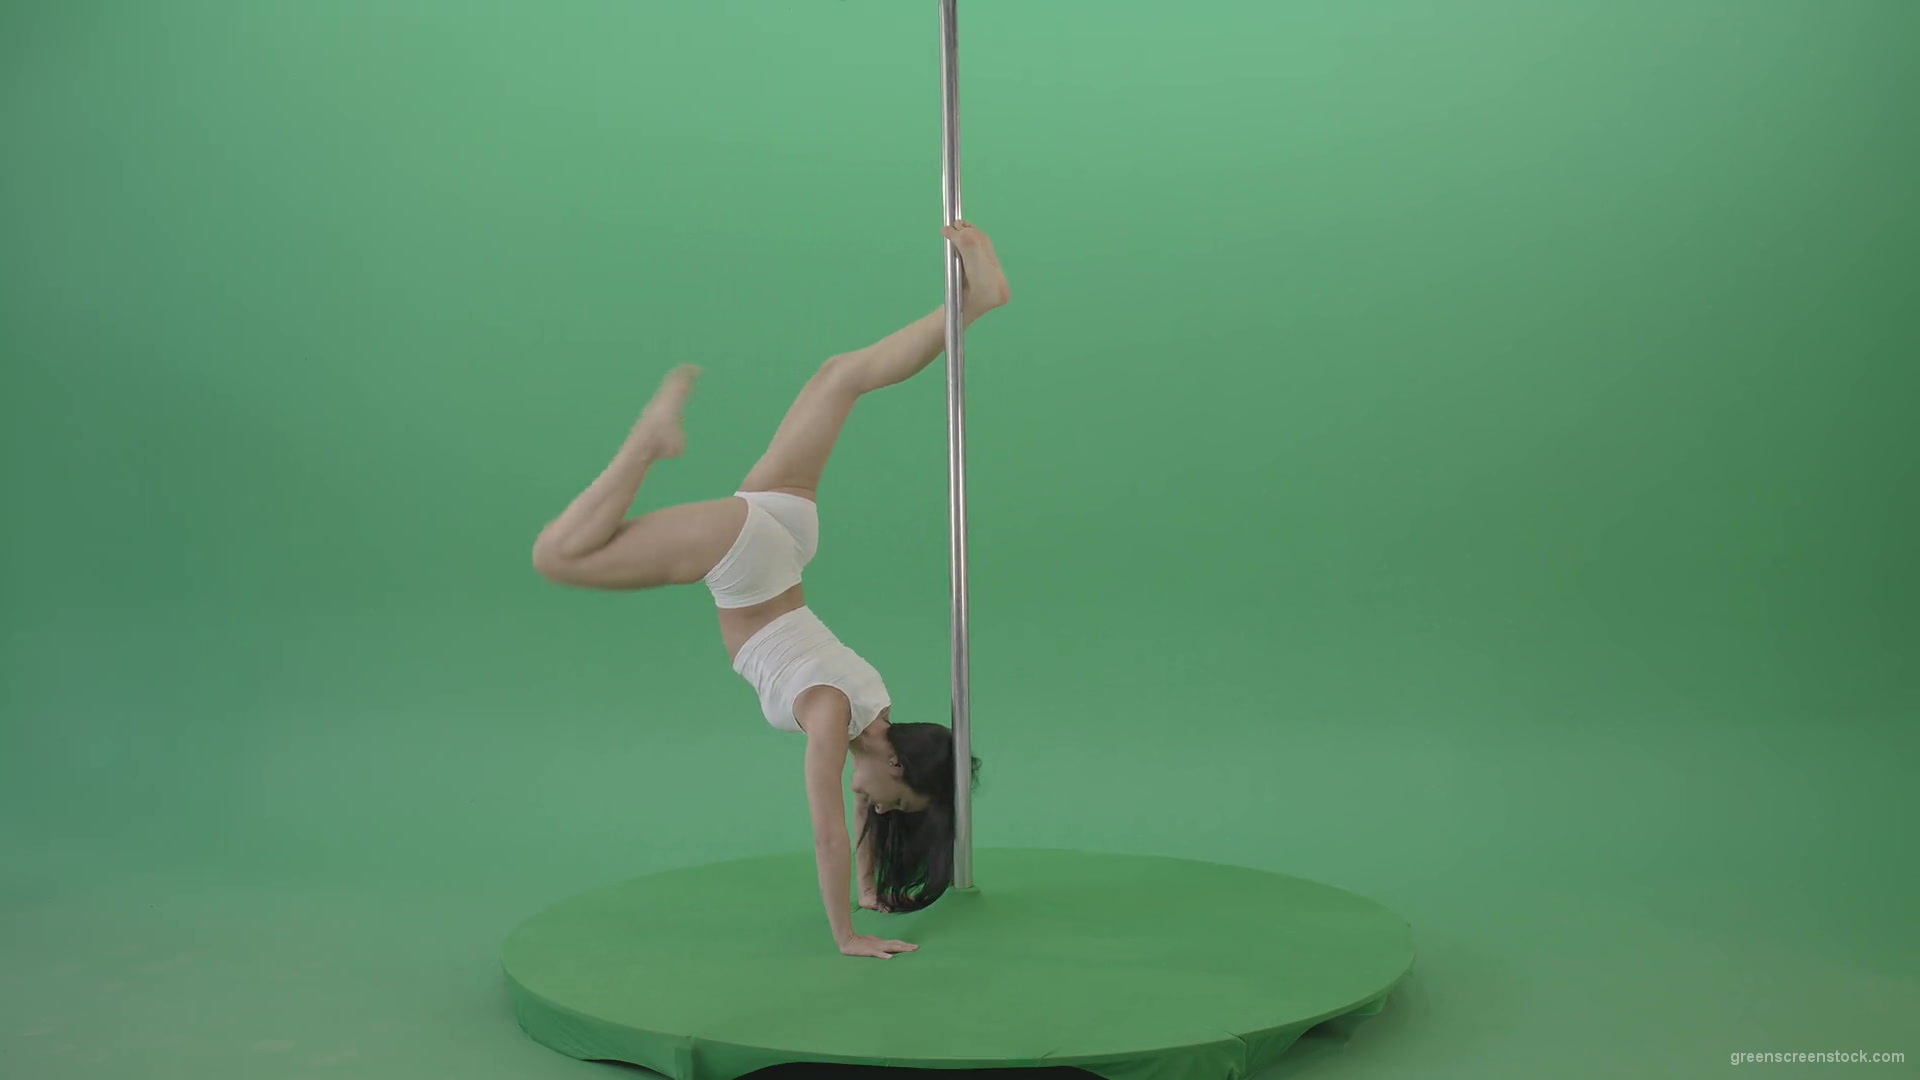 Fit-Girl-waving-legs-dancing-pole-dance-on-green-screen-4K-Video-Footage-1920_007 Green Screen Stock